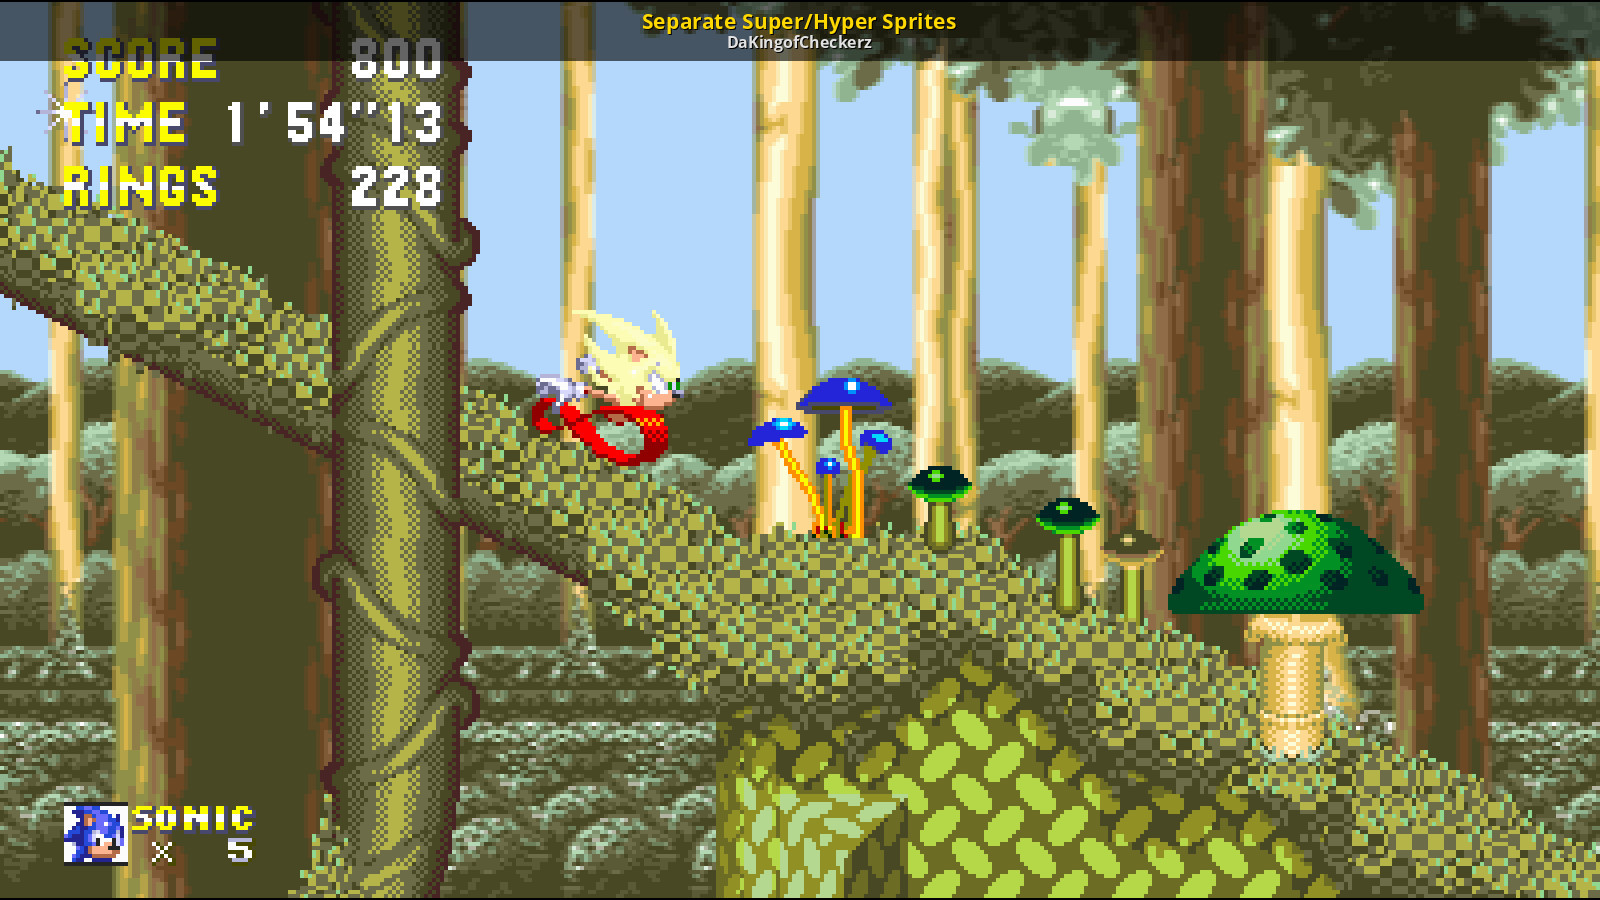 Hyper Sonic, Hyper Tails, Hyper Knuckles in Sonic 3 